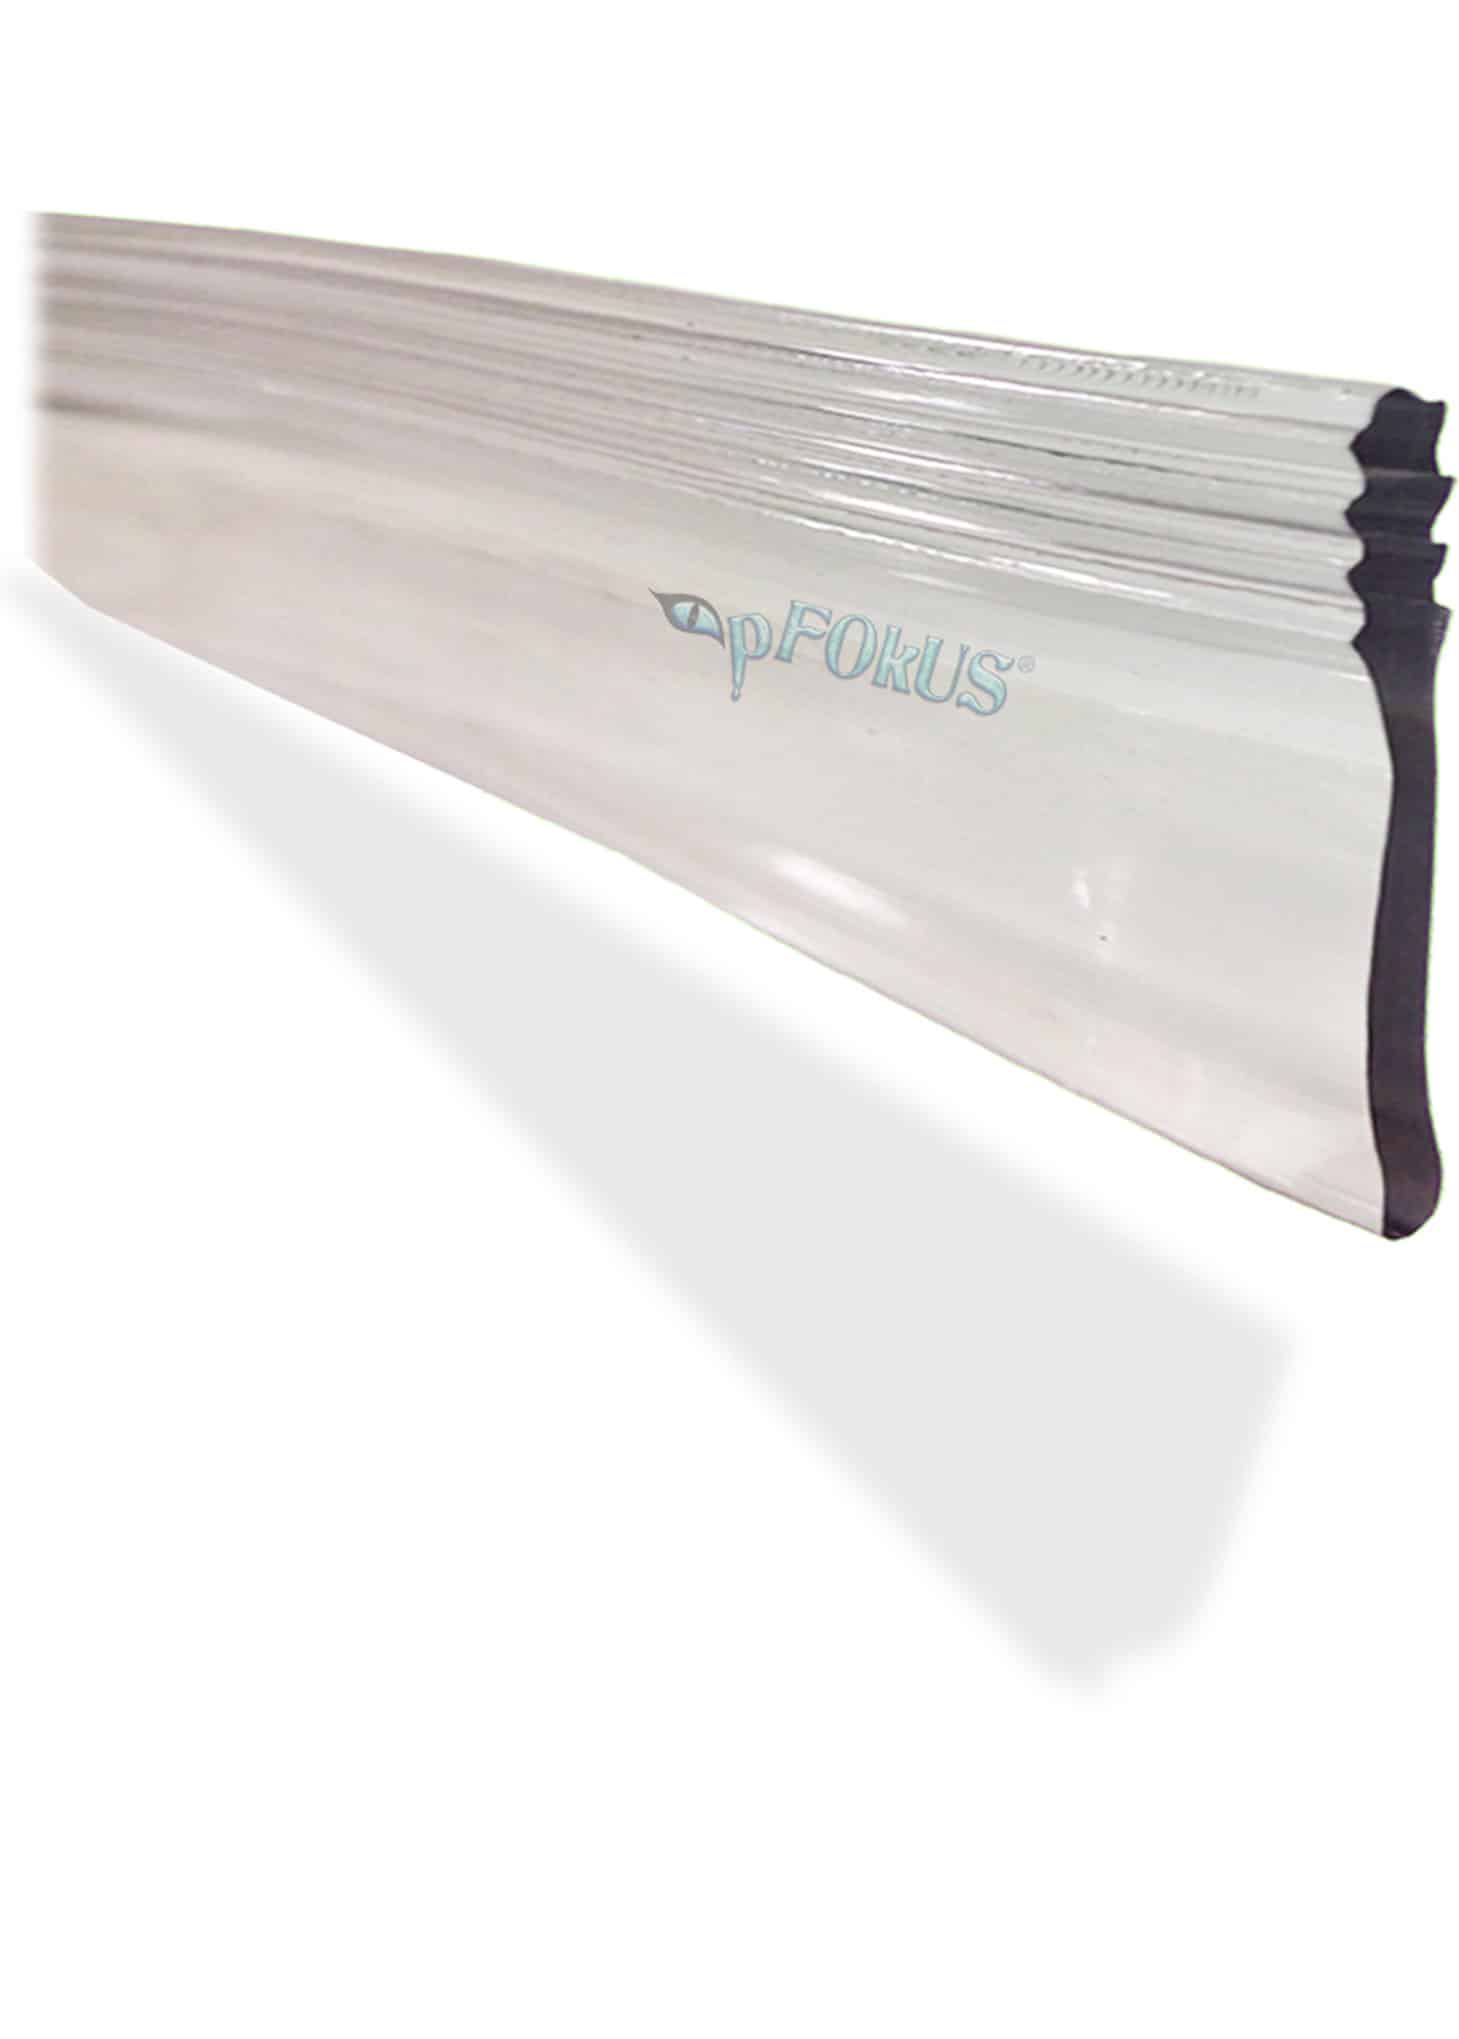 DS8229 Shower Glass Door Metal Drip Rail Seal Wipe Replacement Quality pFOkUS